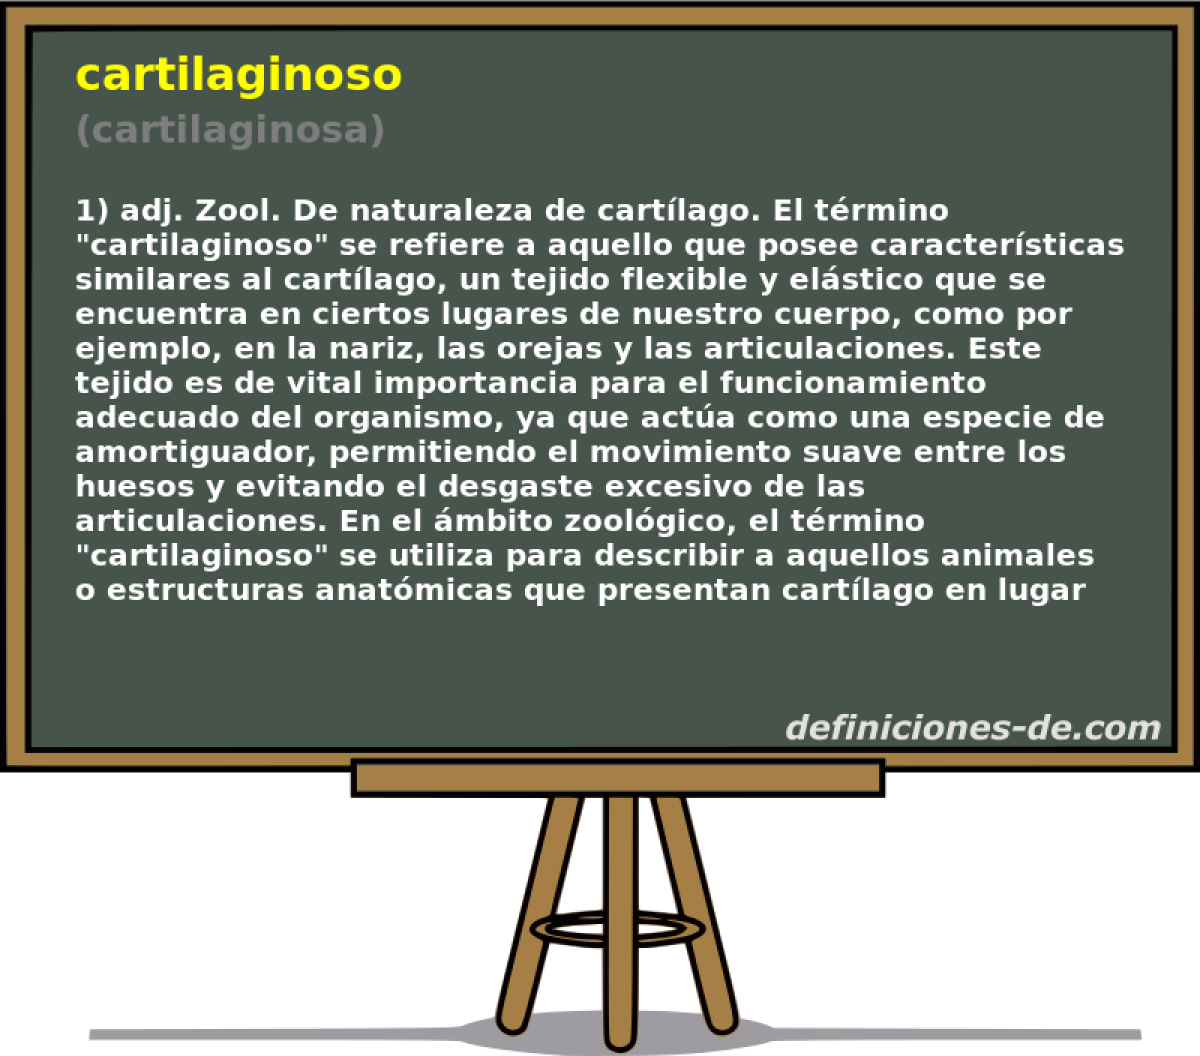 cartilaginoso (cartilaginosa)